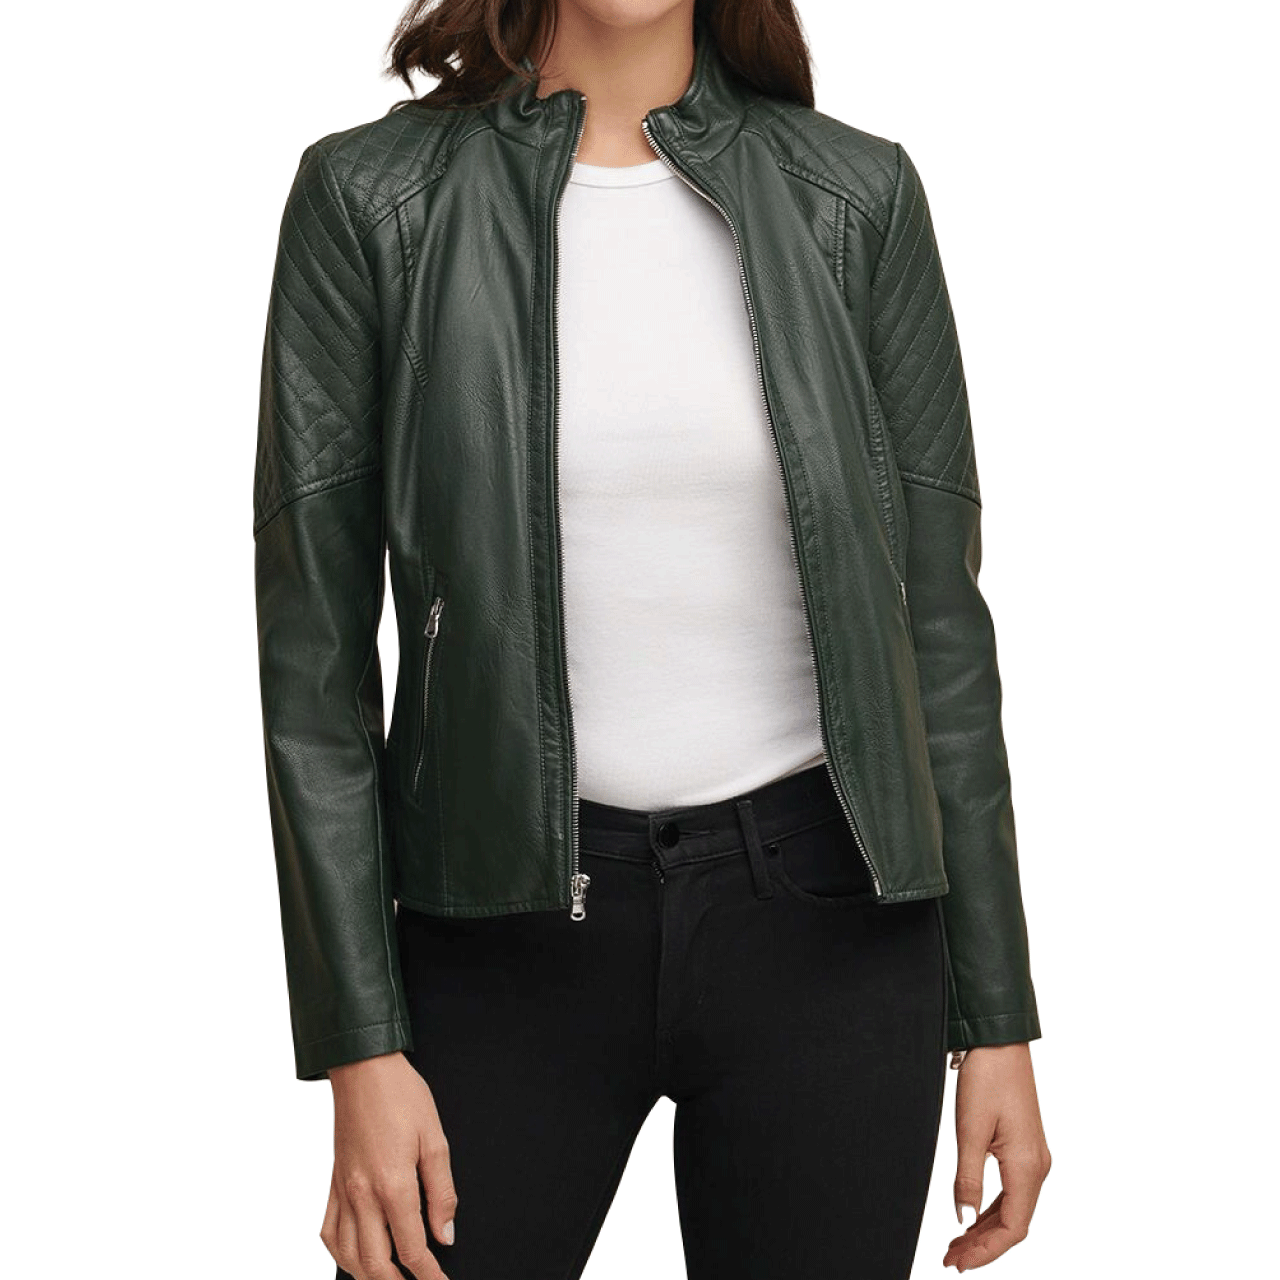 Slim and Smart Quilted Green Color Zipper Pocket Sheepskin Leather Jacket Women